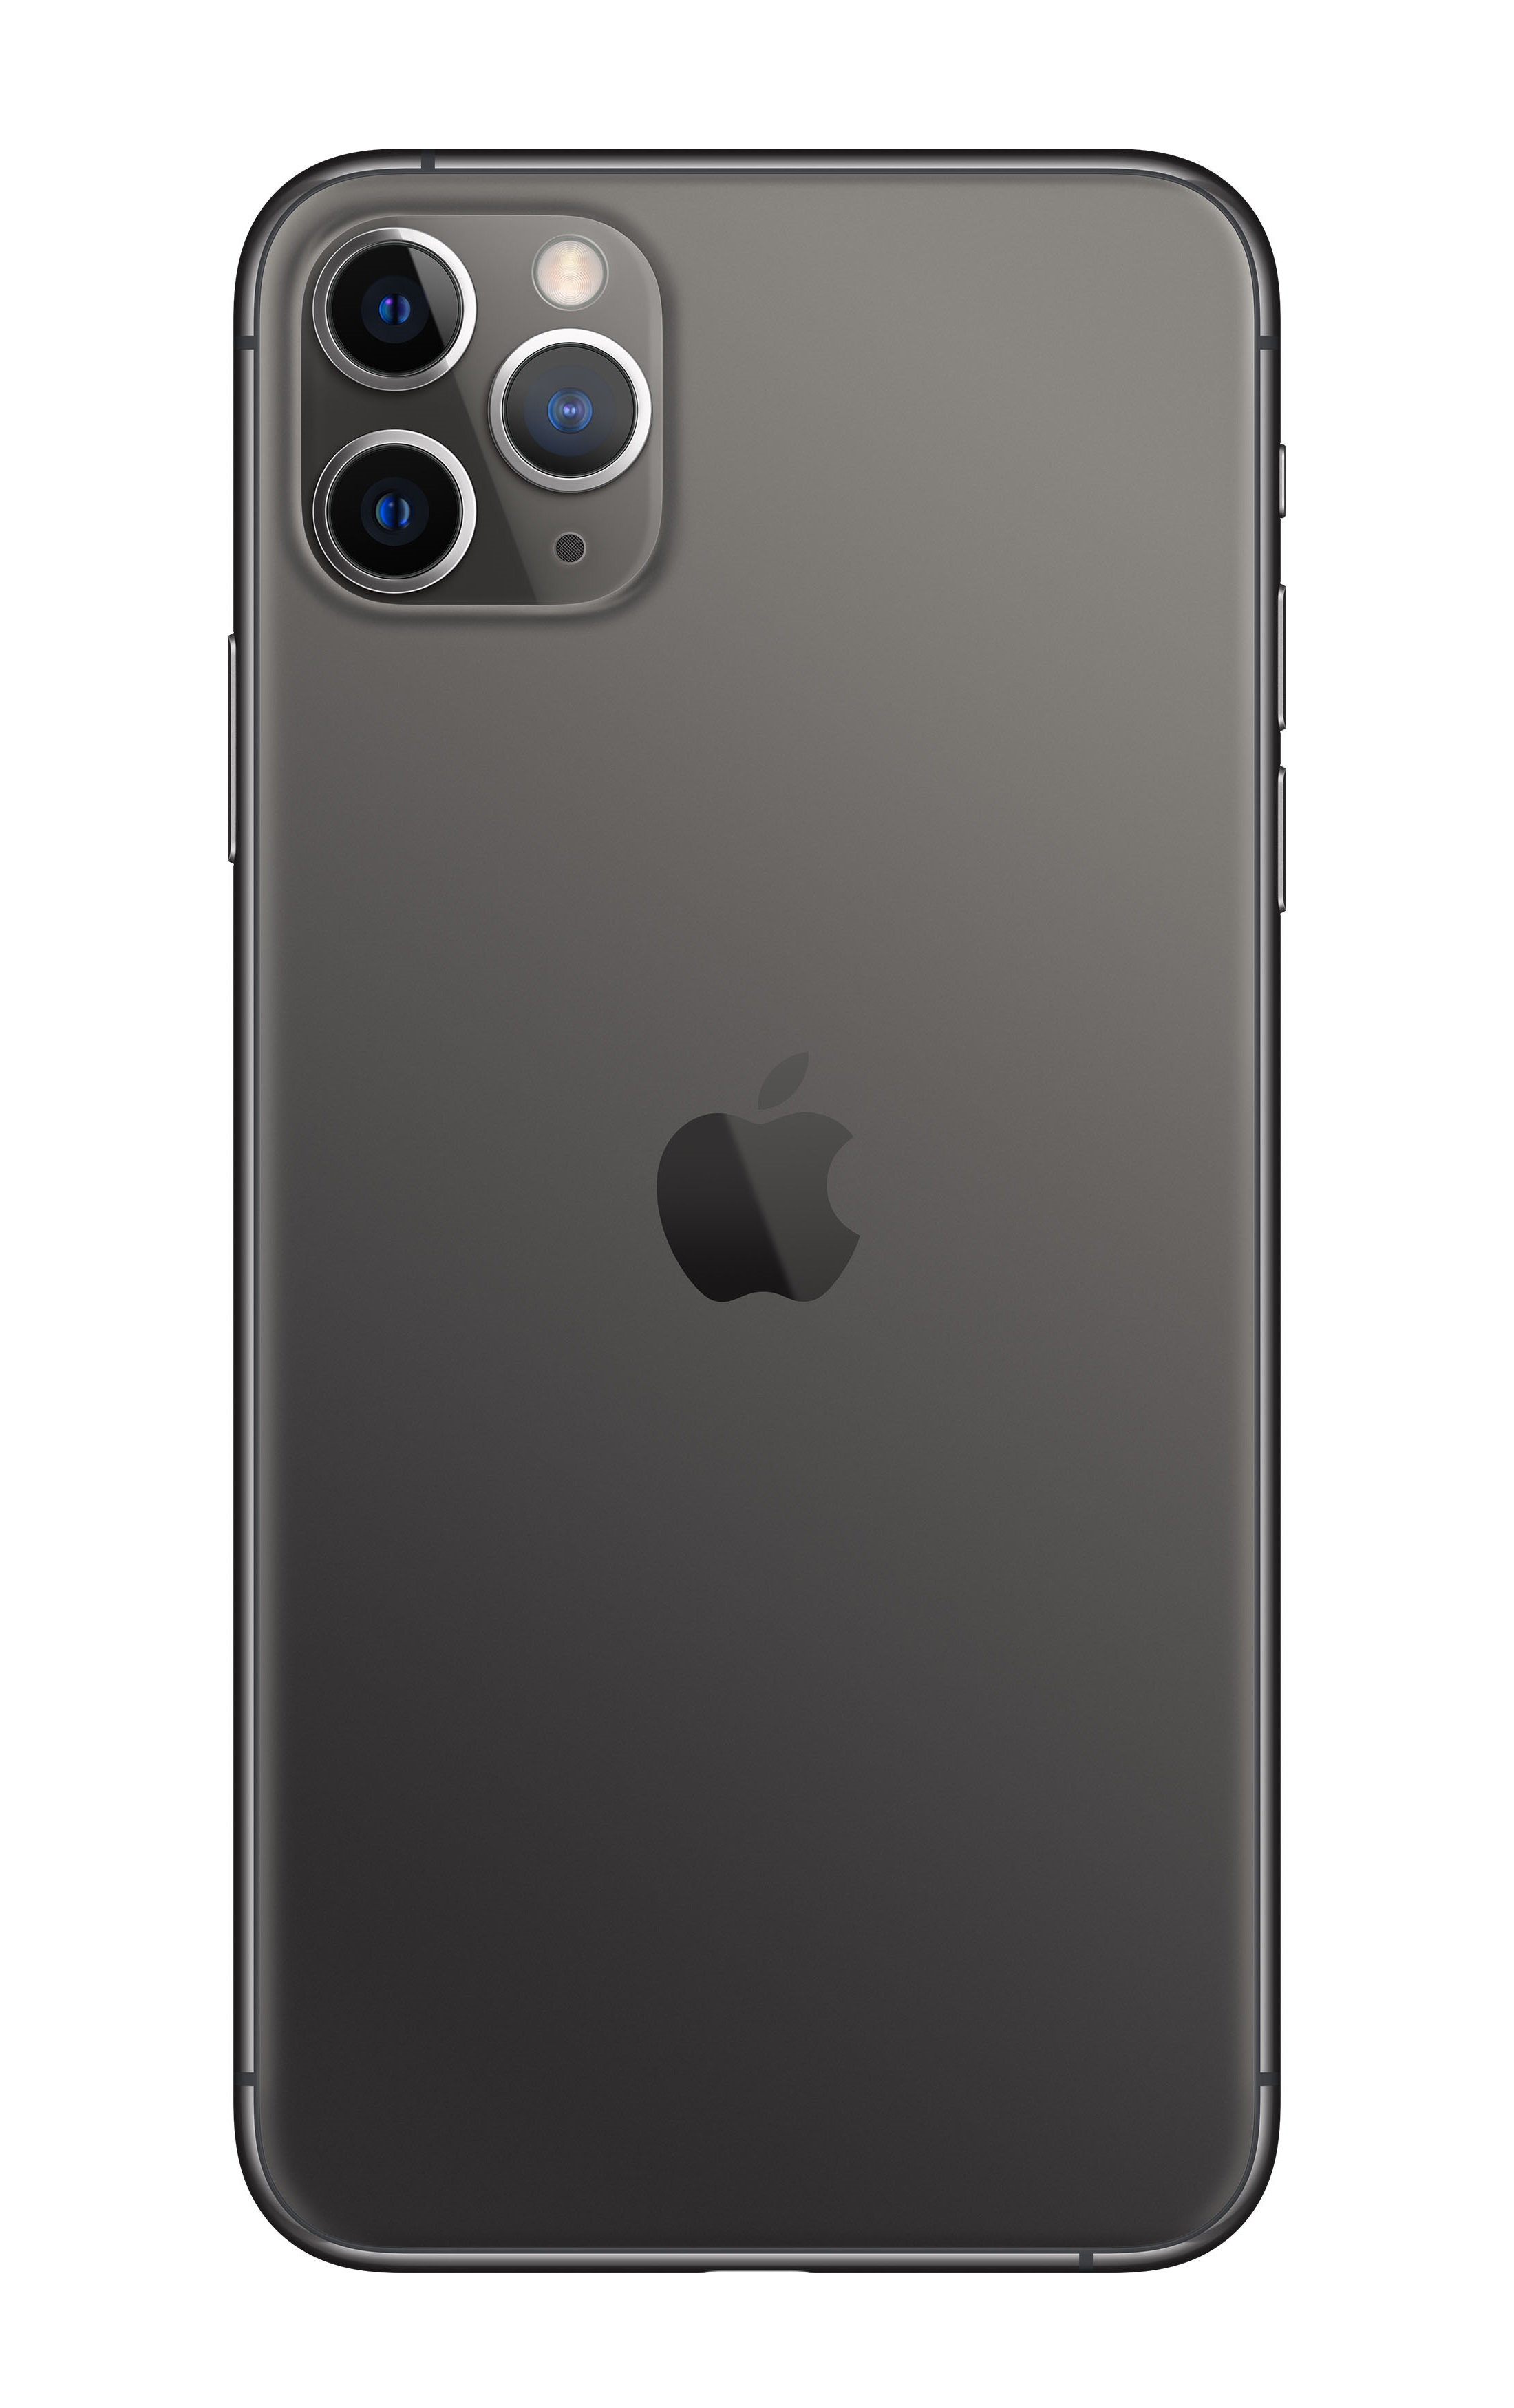 Pro Grau Max Dual REFURBISHED iPhone (*) 256 APPLE SIM 11 GB